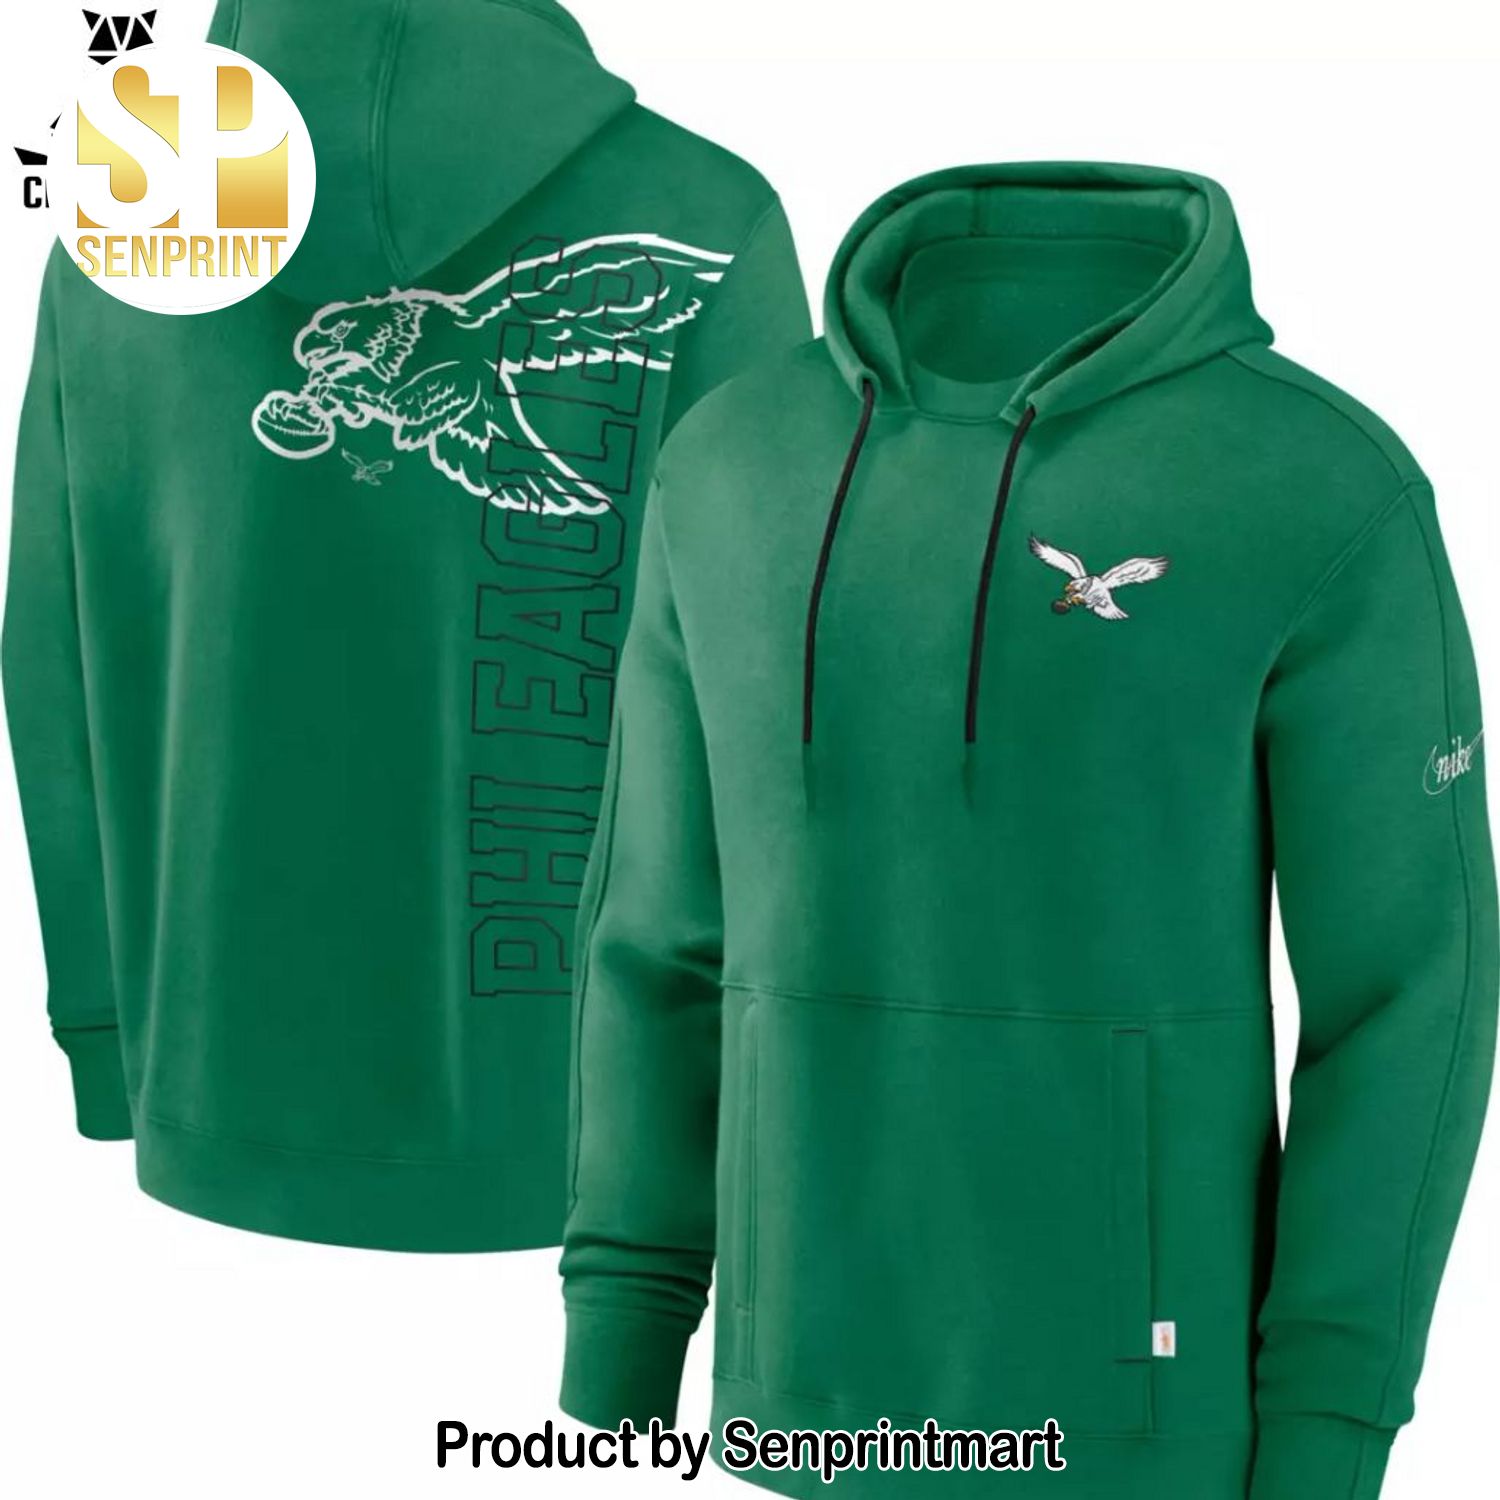 Philadelphia Eagles Green Mascot Logo Design All Over Printed Shirt